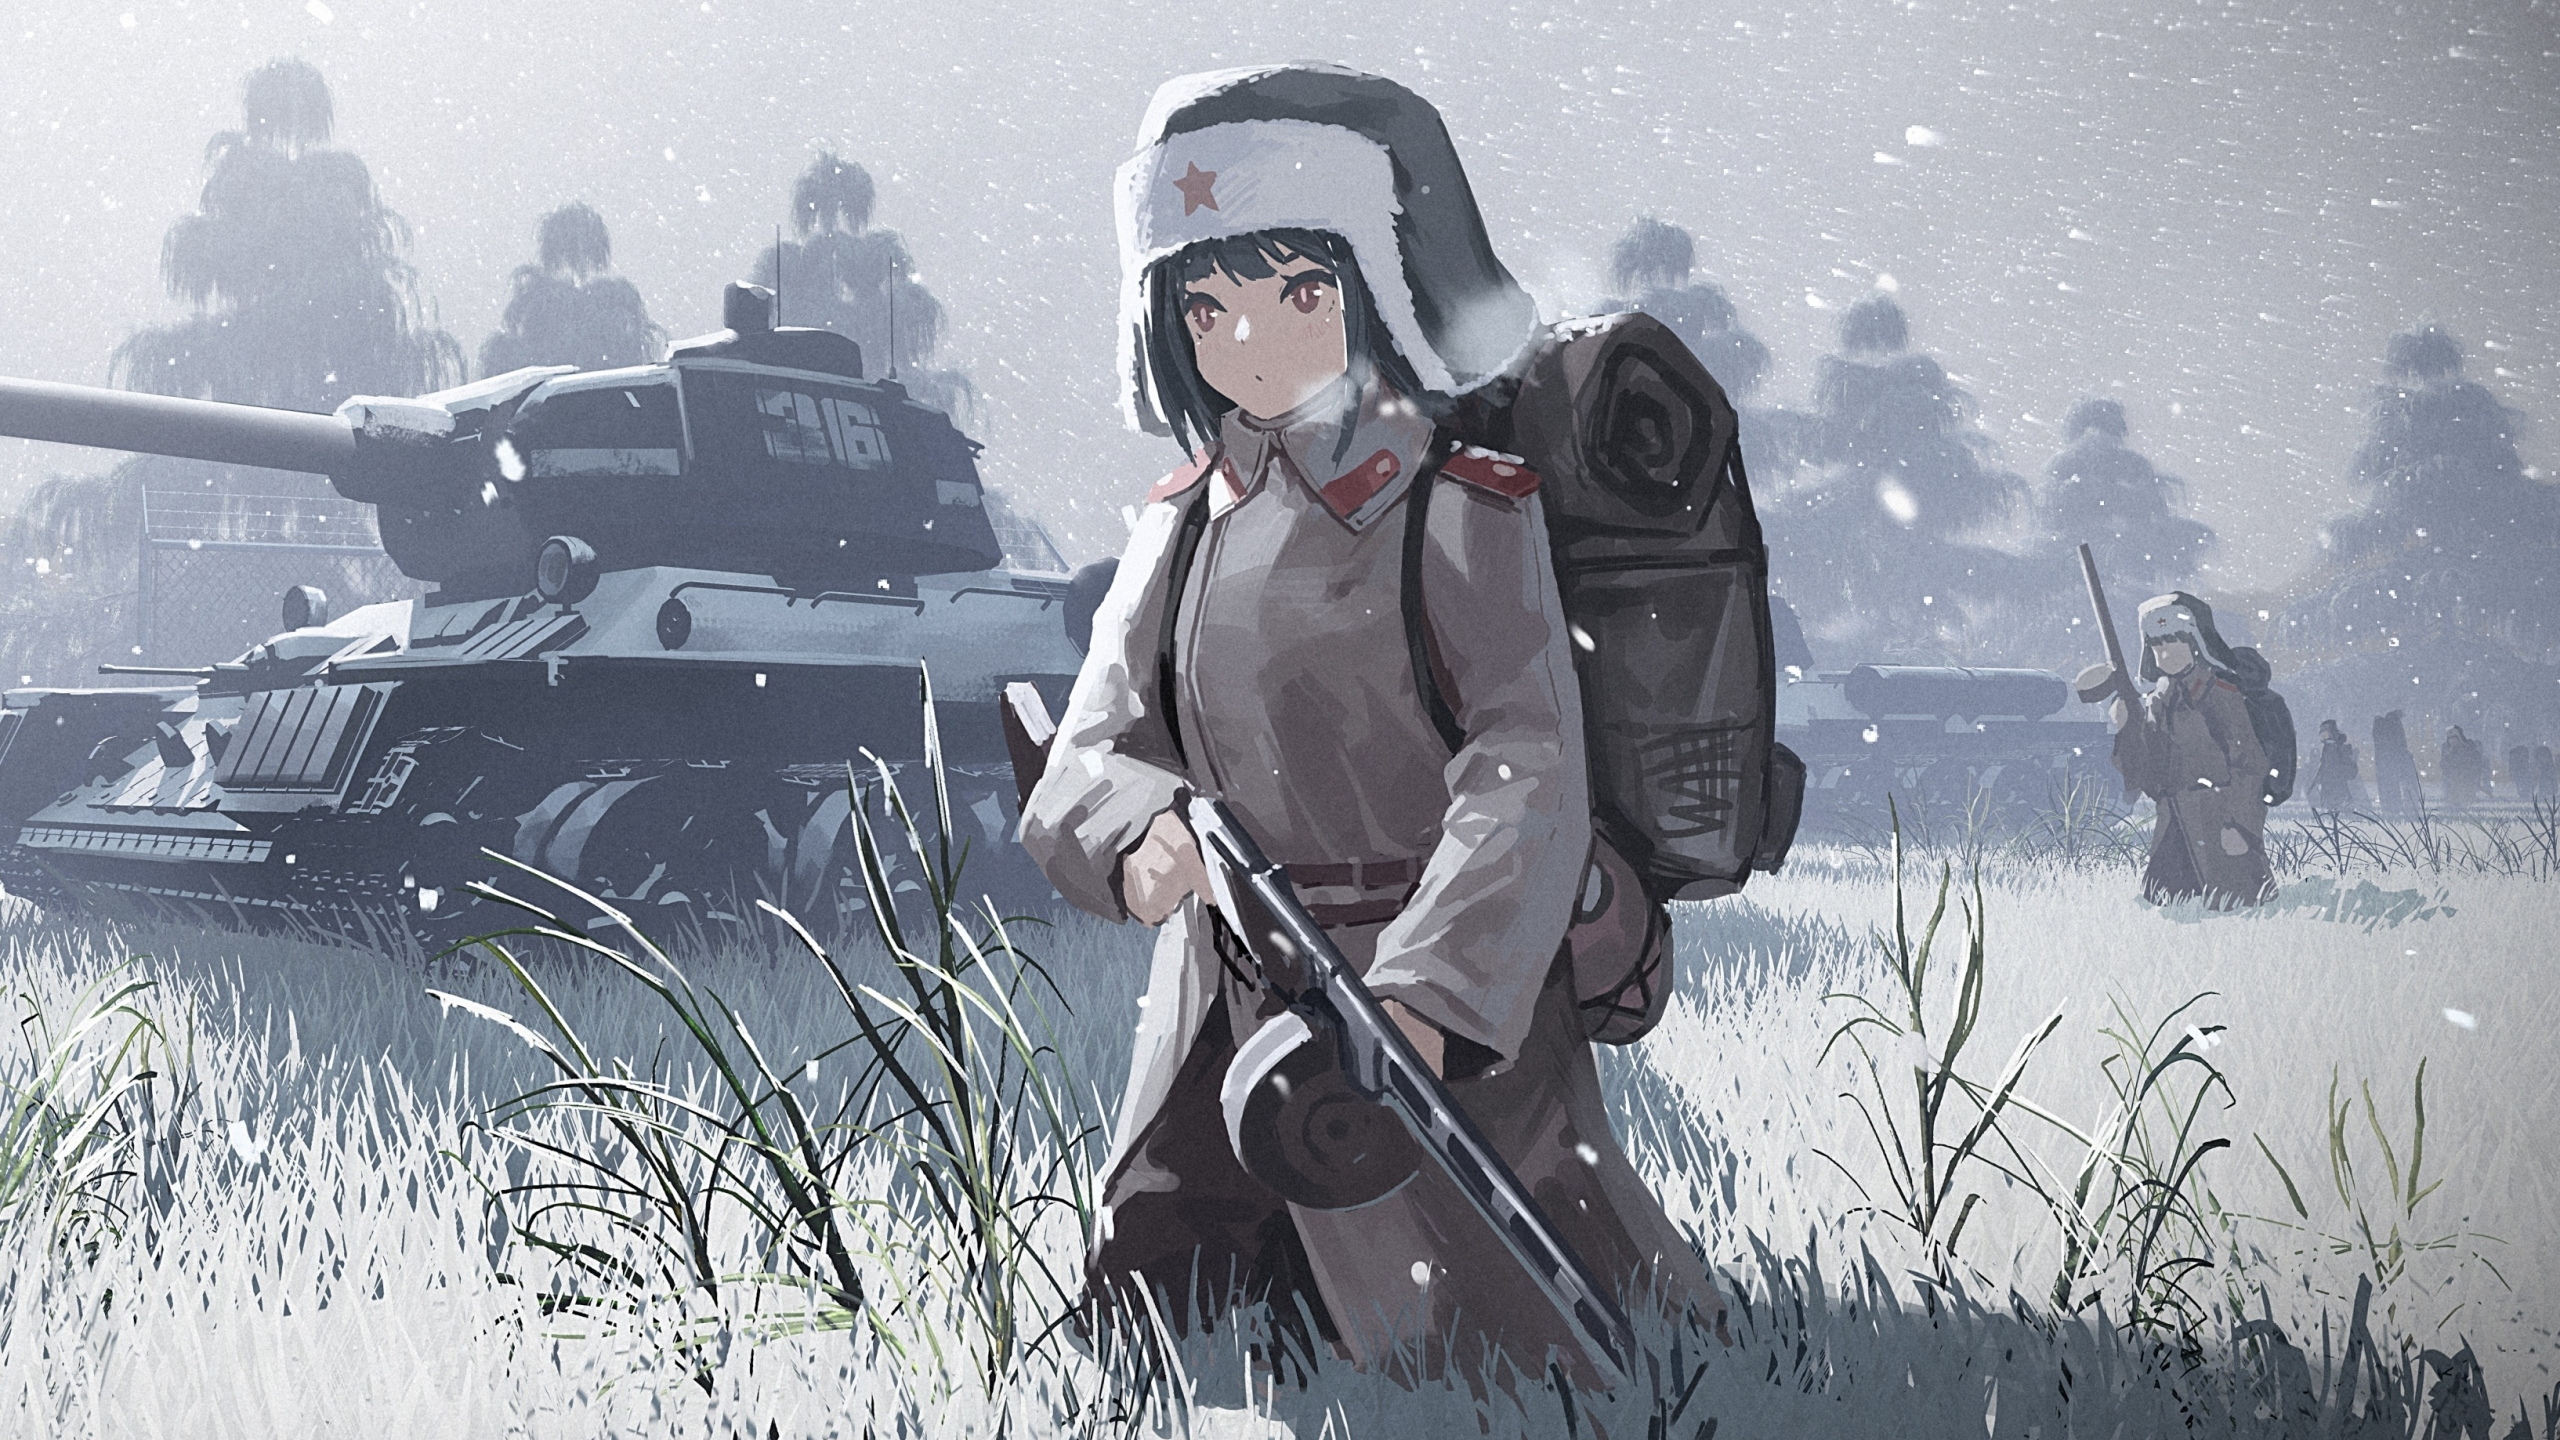 Download wallpaper 2560x1440 war, solider, anime girl, art, dual wide 16:9  2560x1440 hd background, 21148